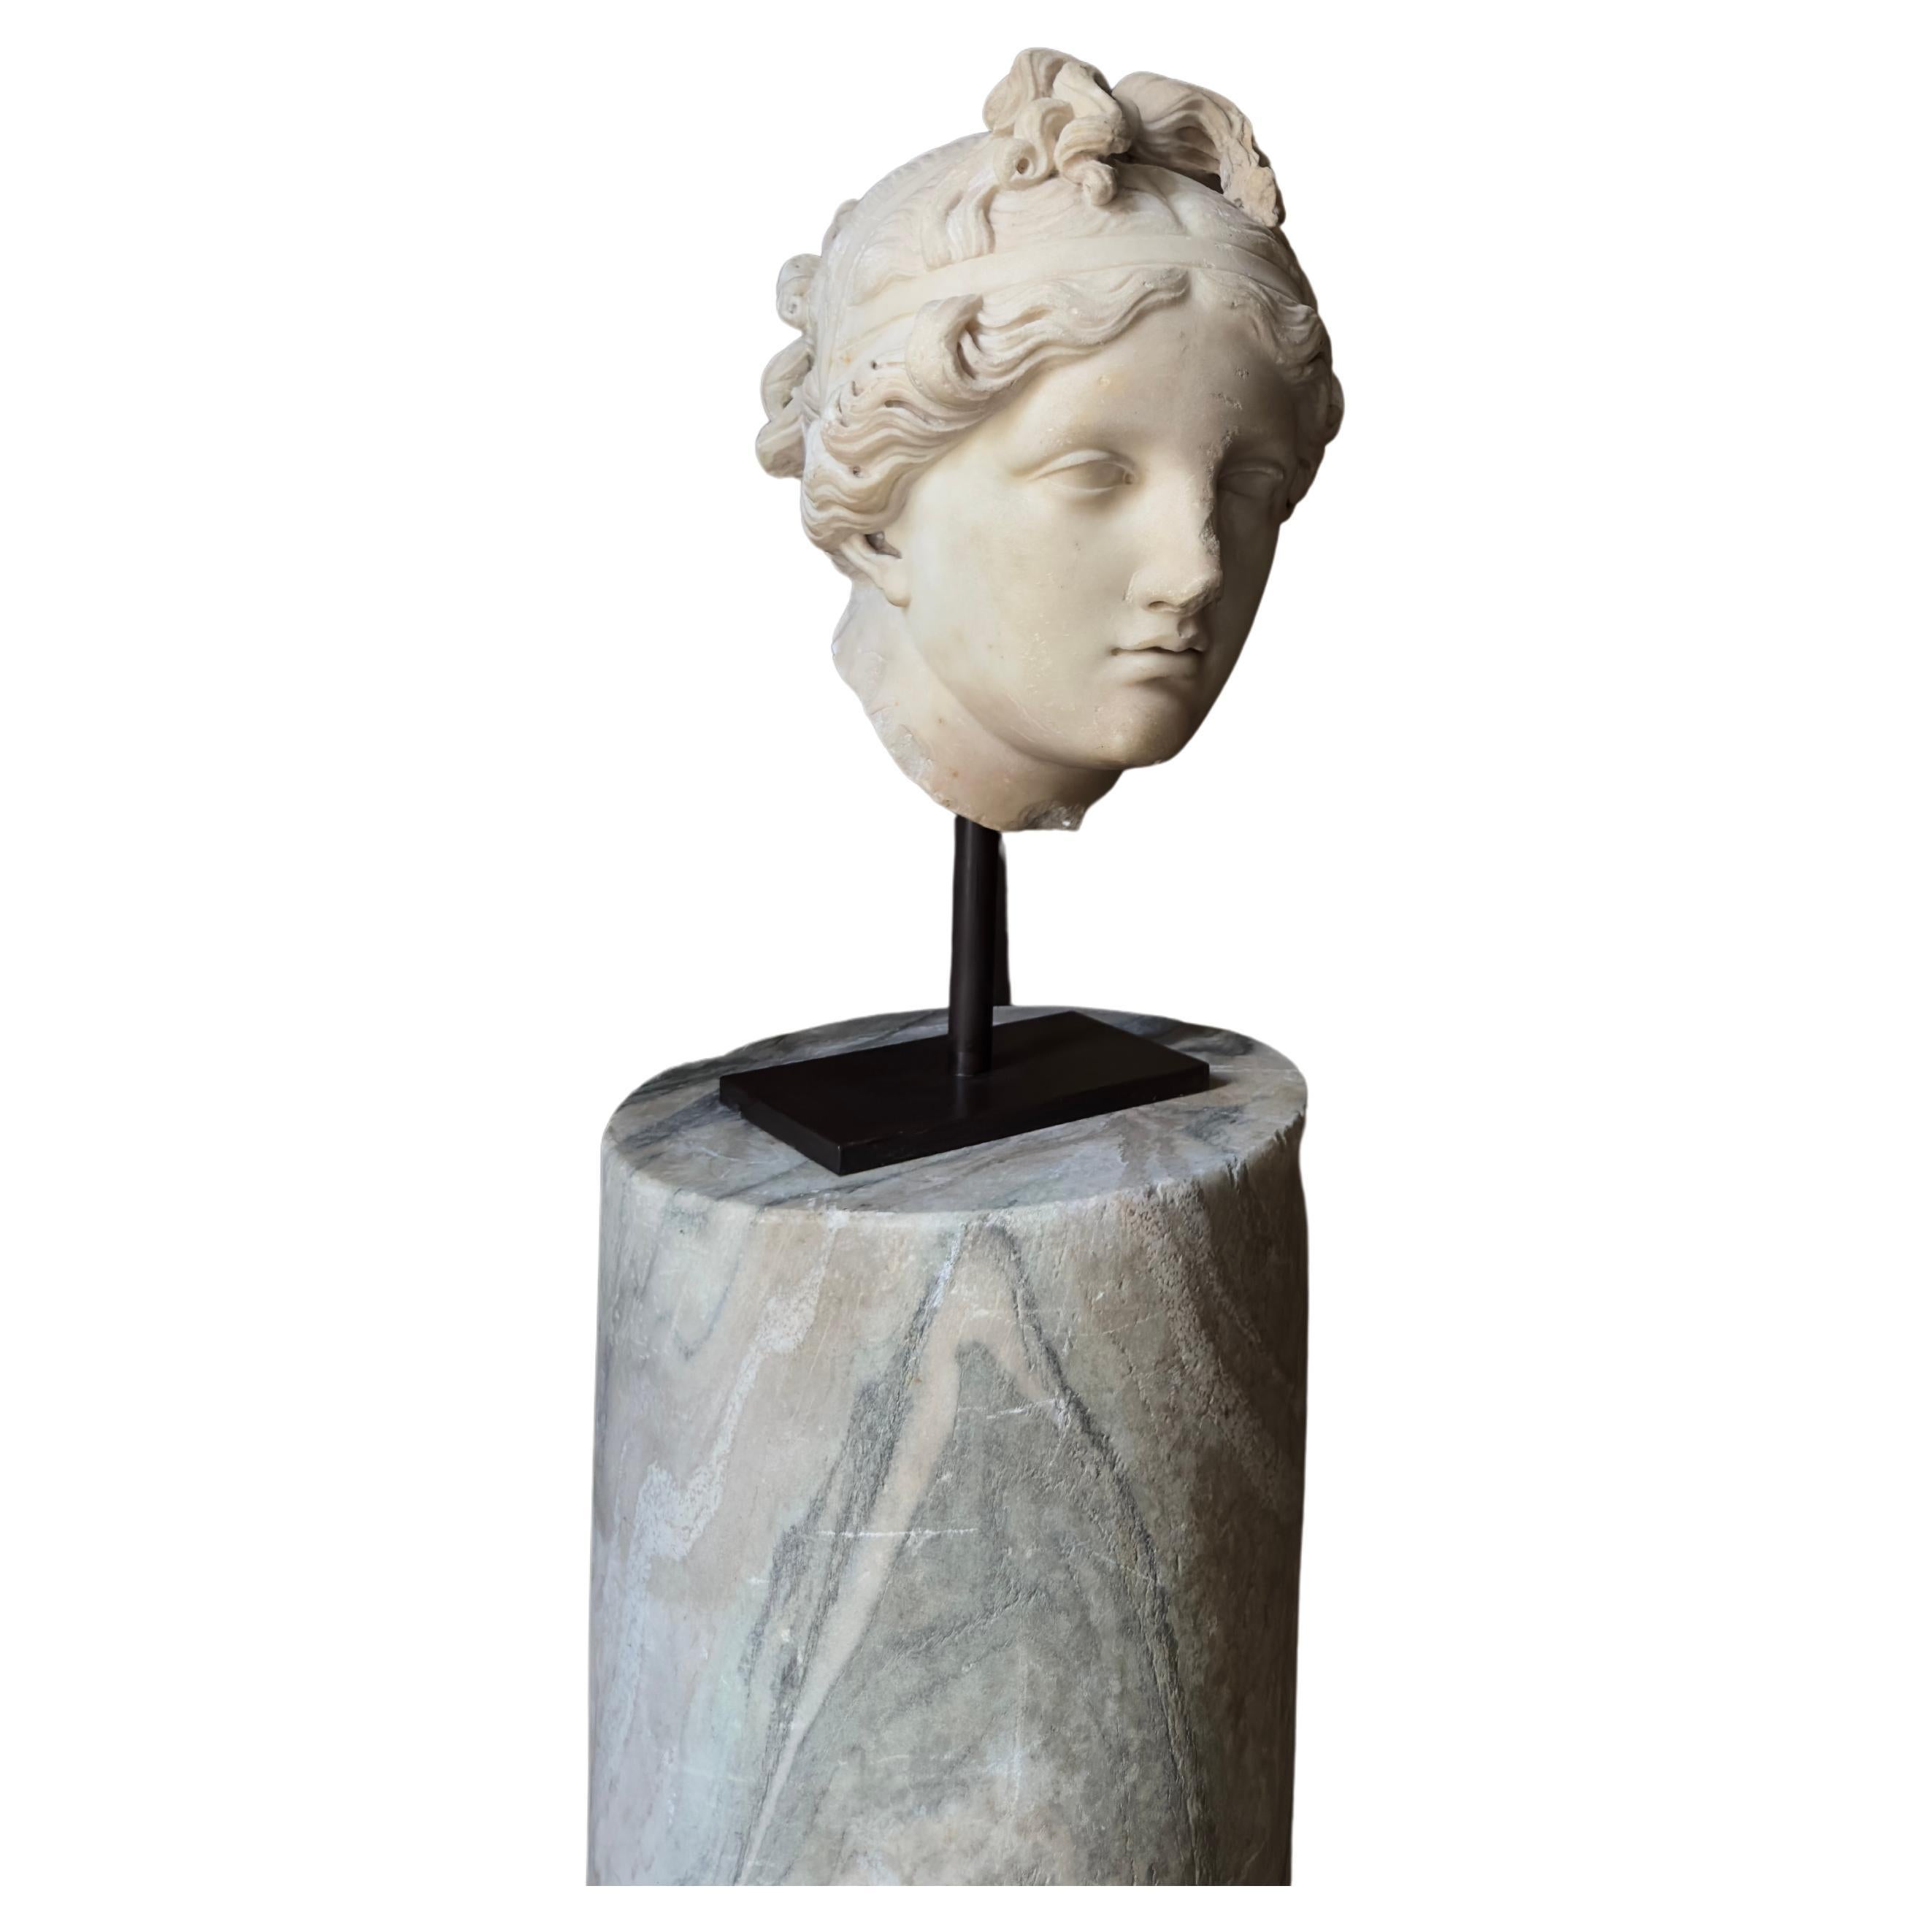 An 18th century or earlier statuary marble head of Venus